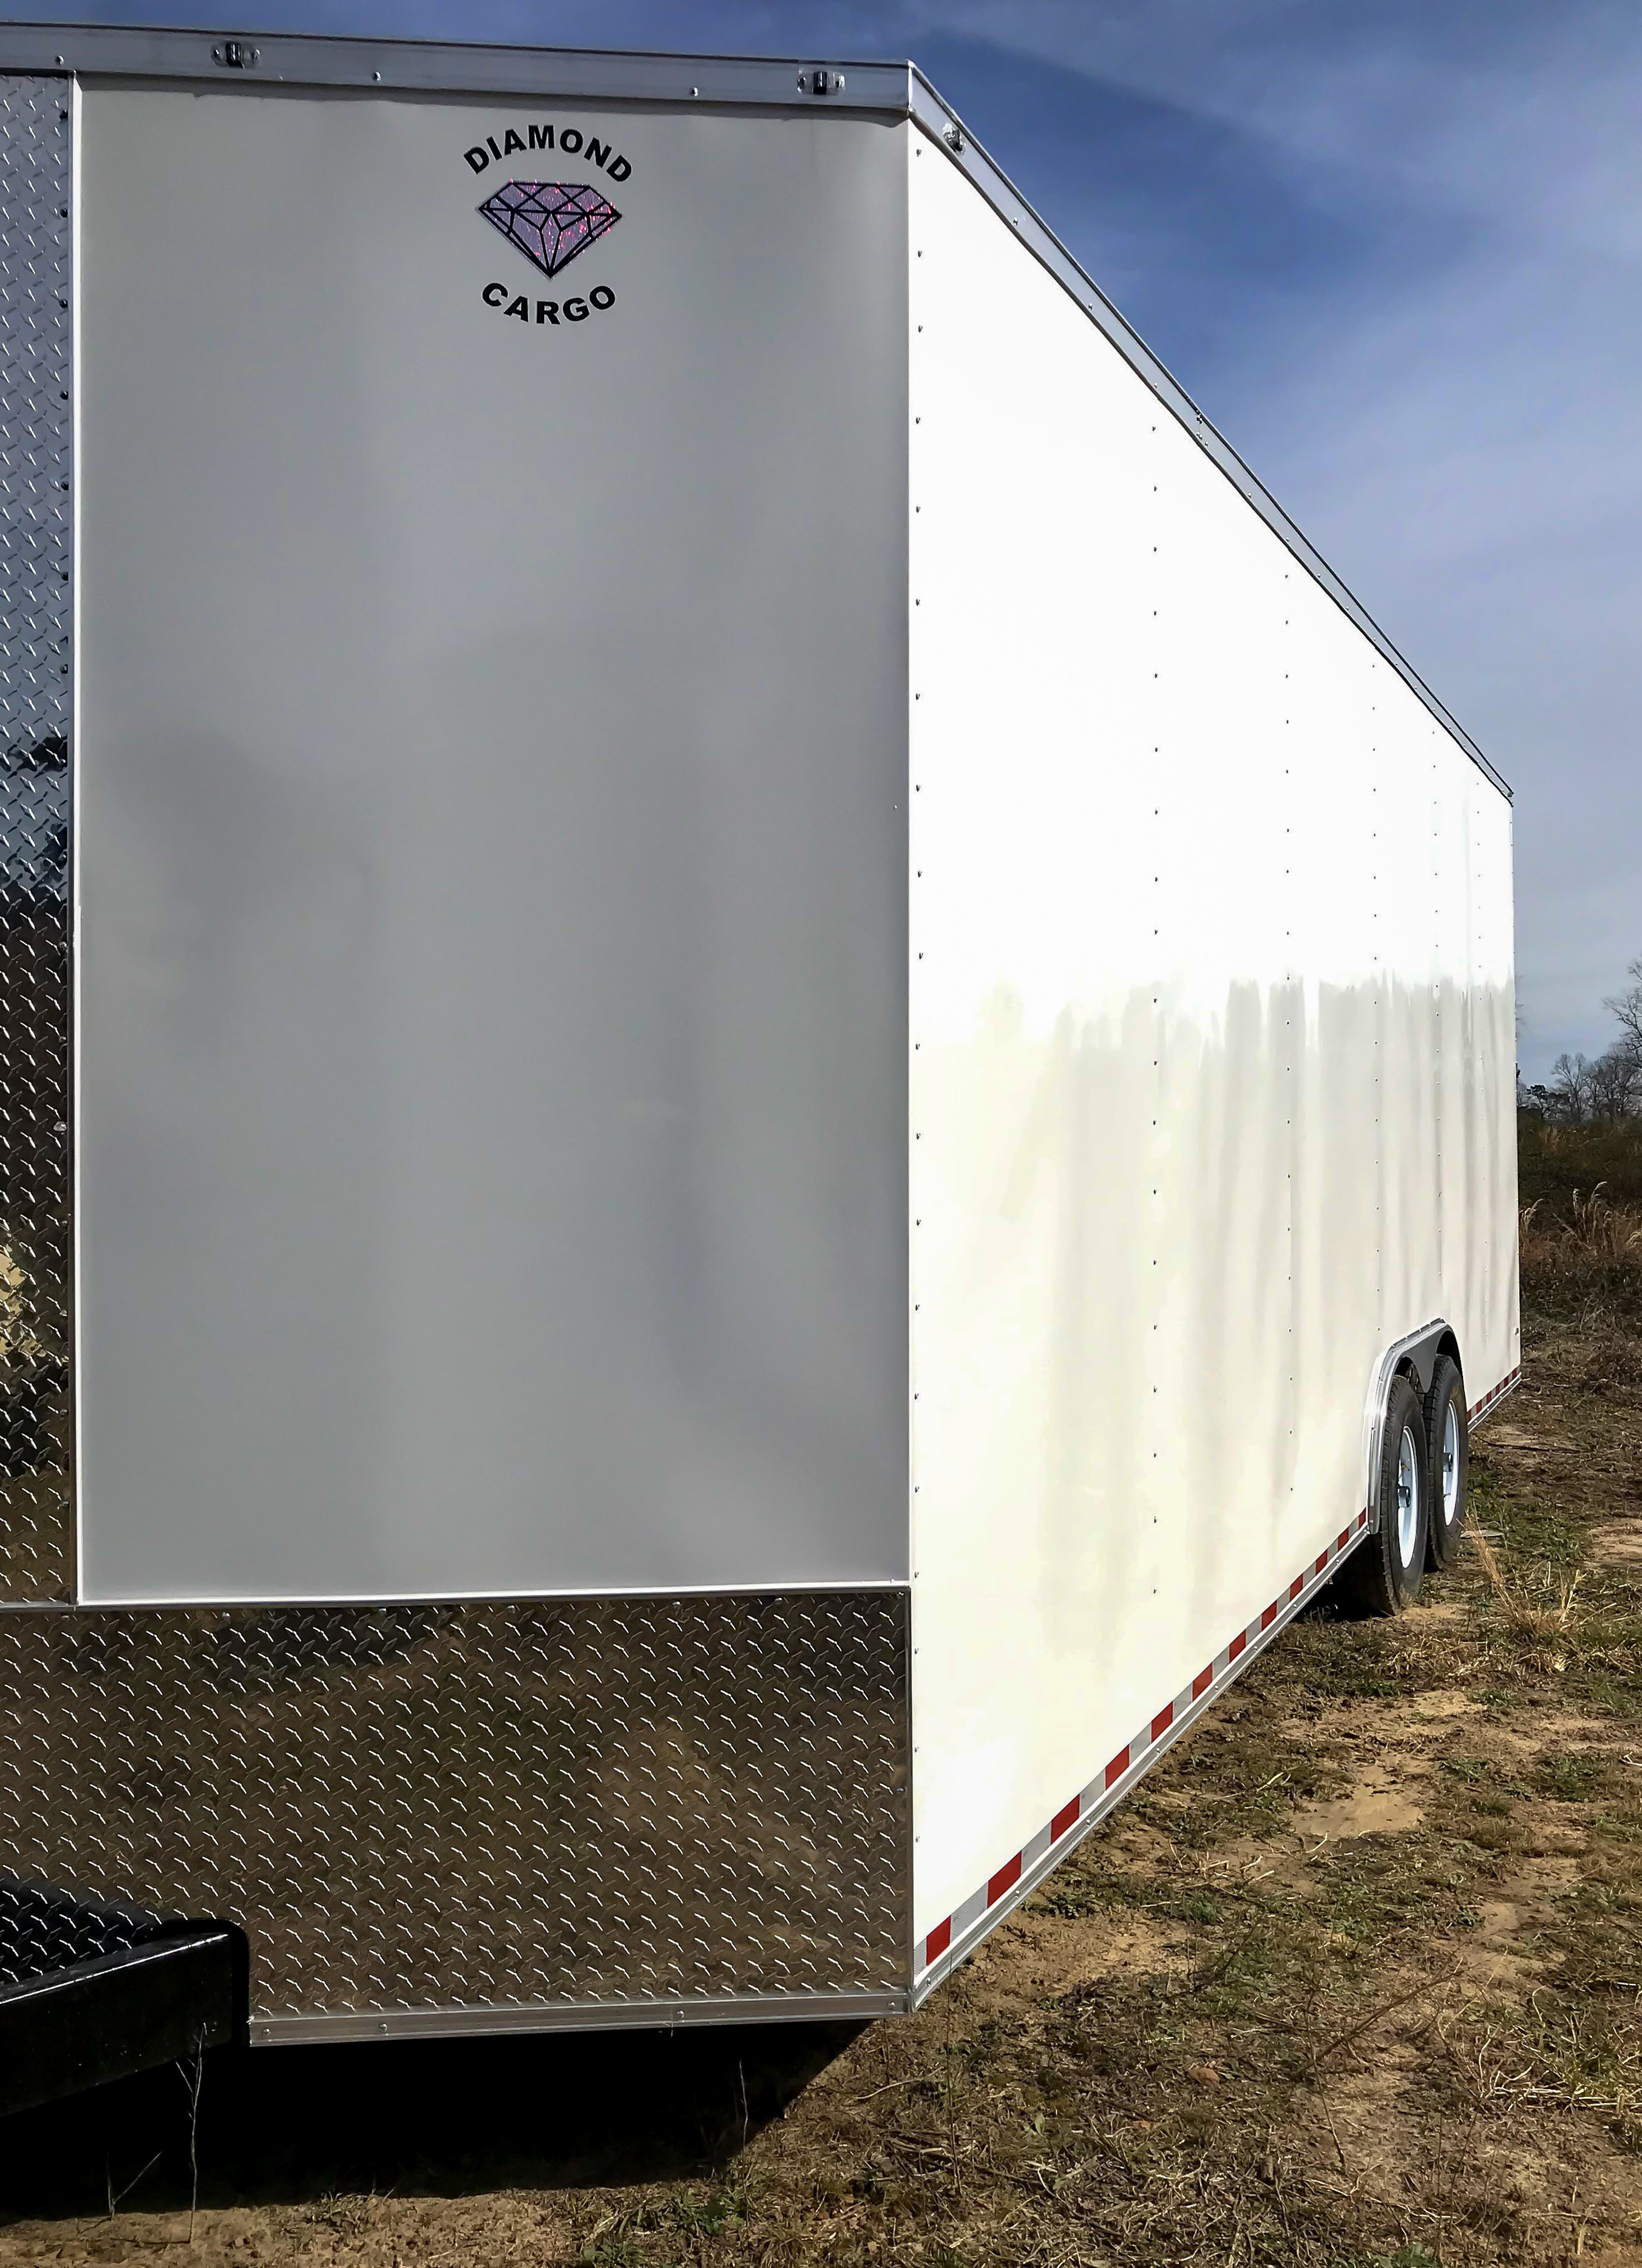 New upgrade trailer